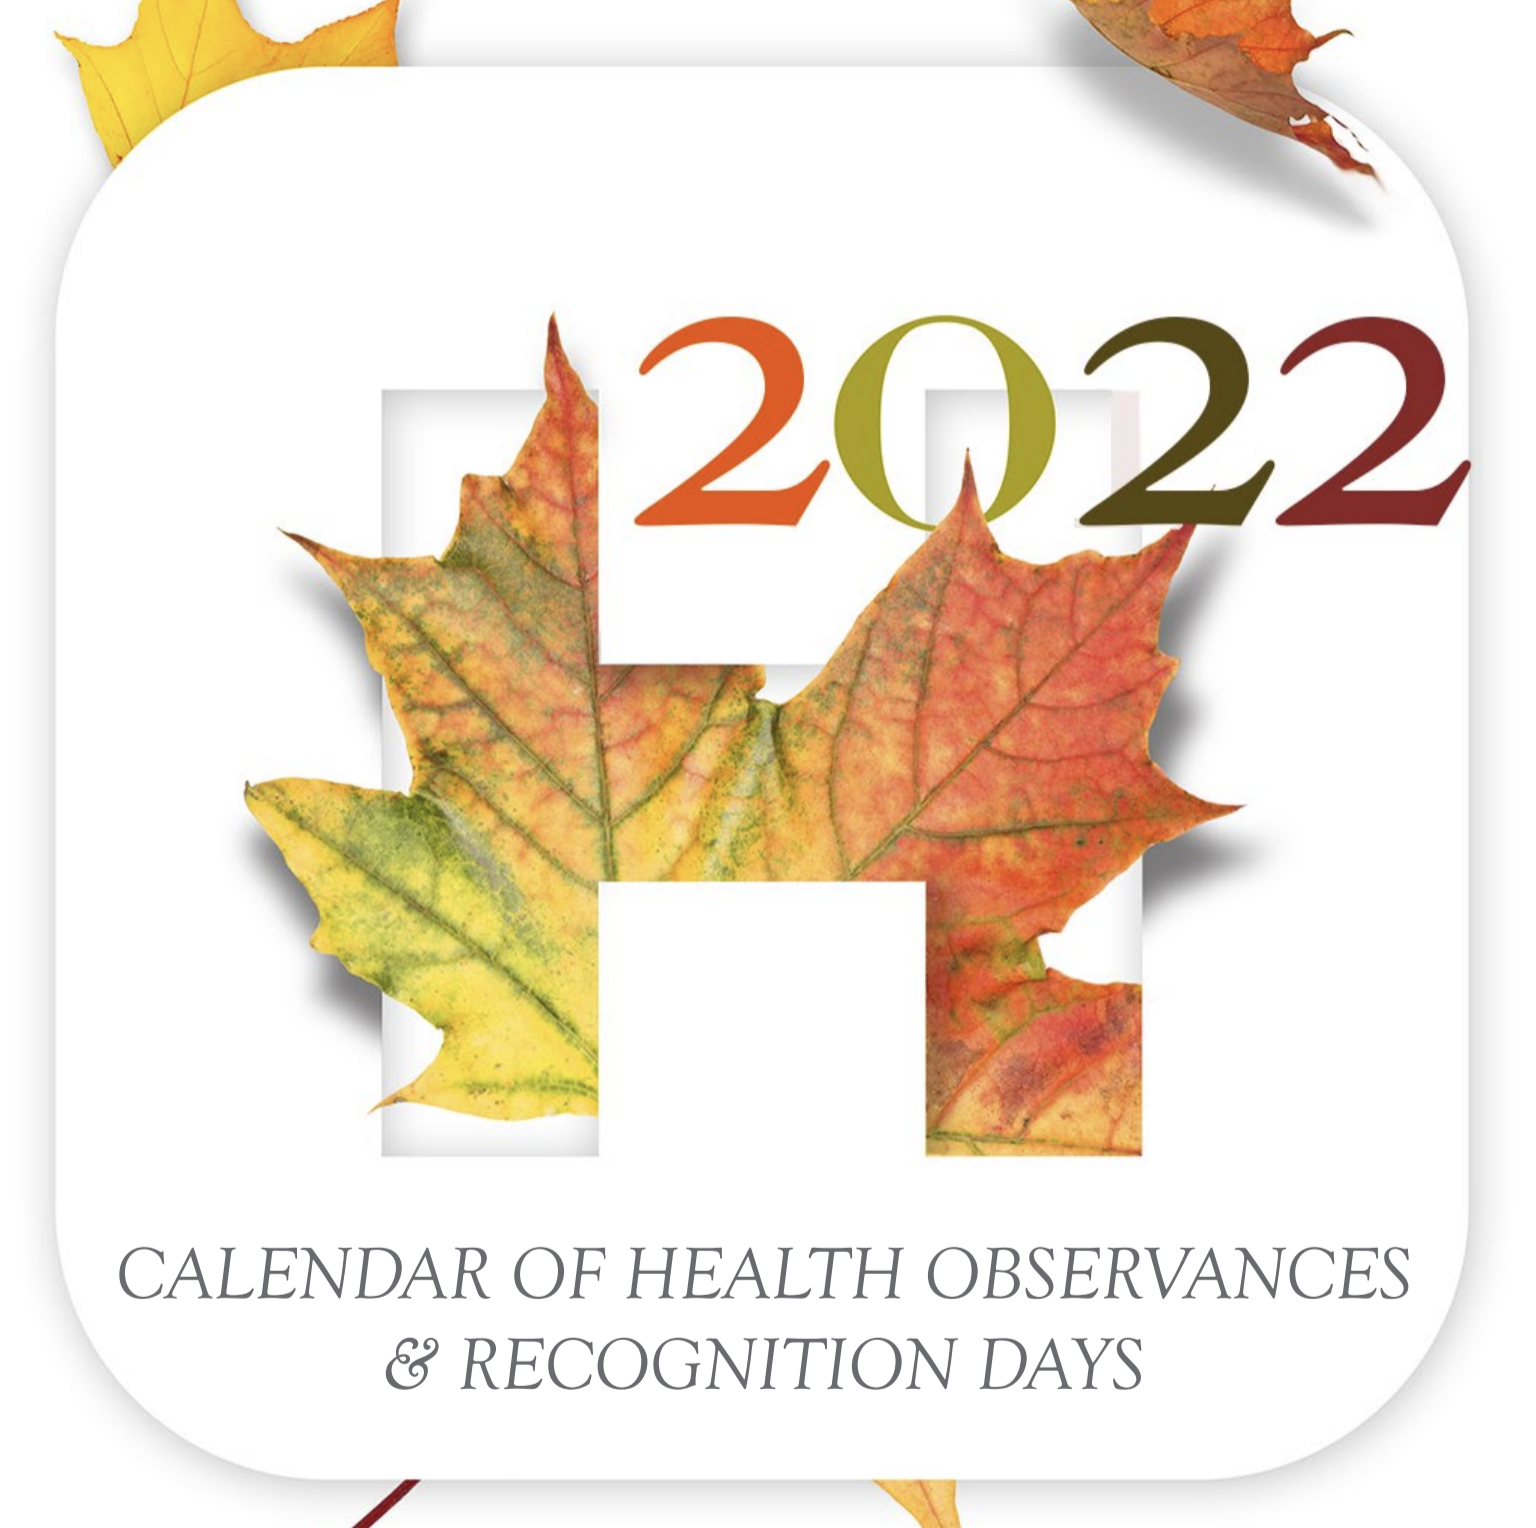 The American Hospital Association’s 2022 SHSMD Calendar of Health